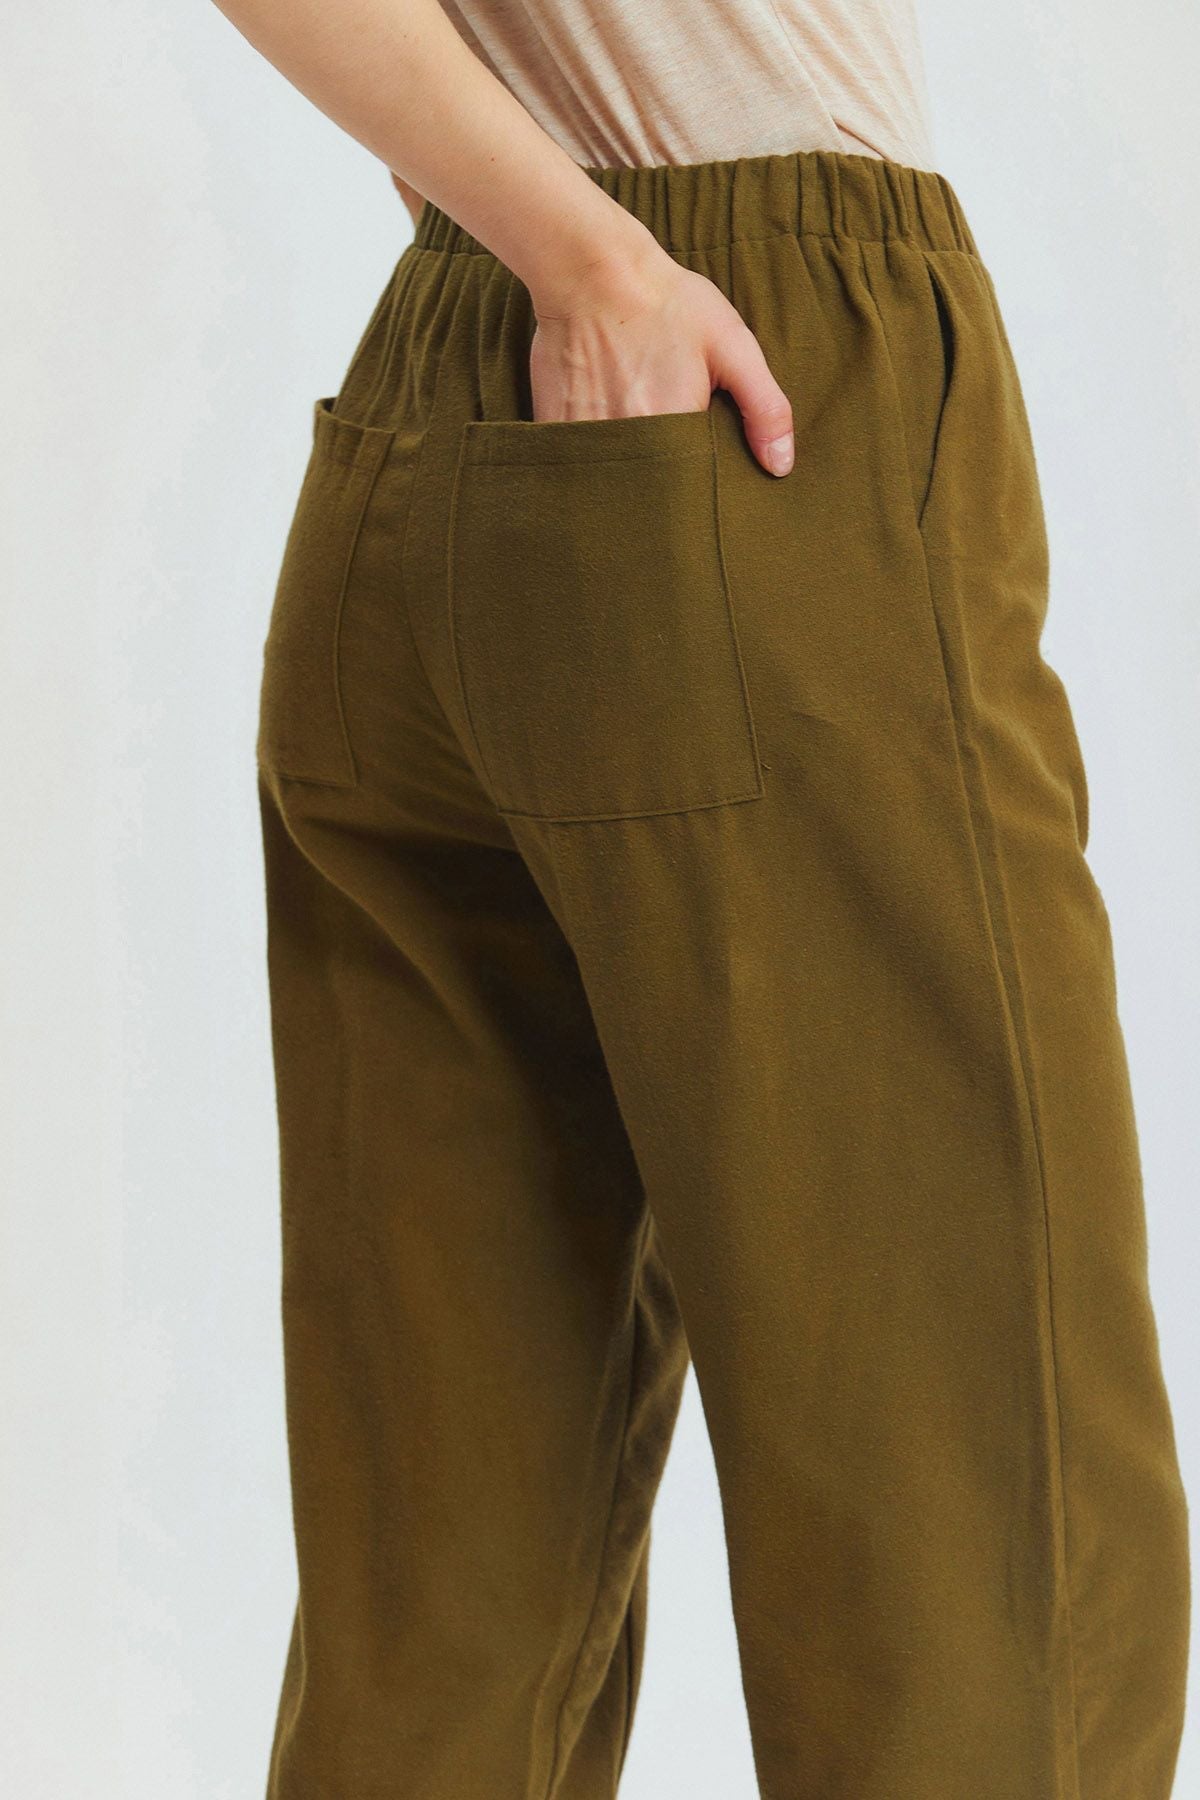 Loose Fit Women's Boho Pants with Elastic Waist Khaki